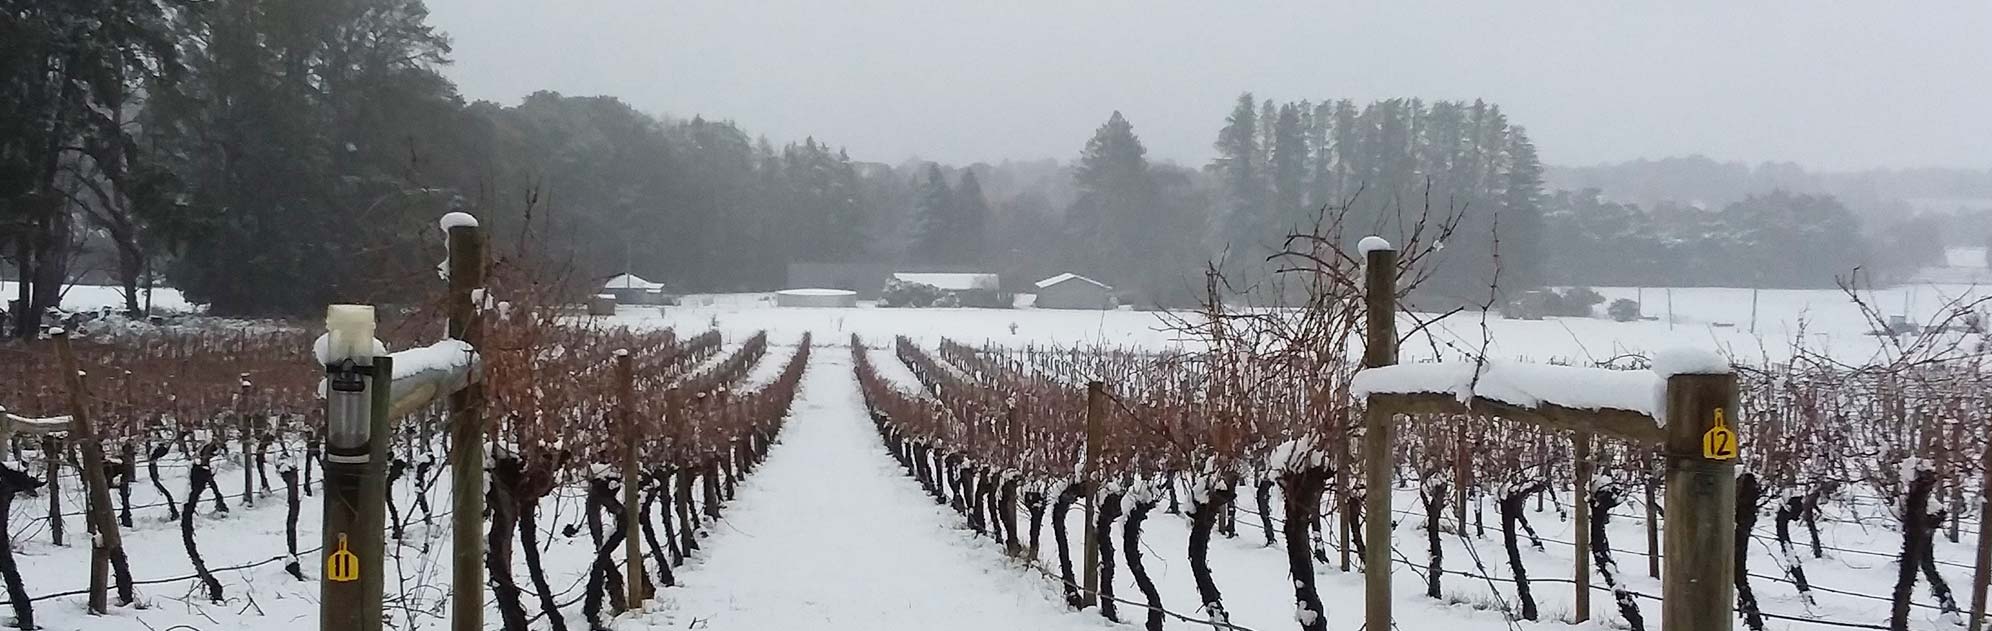 Snow covered vineyard